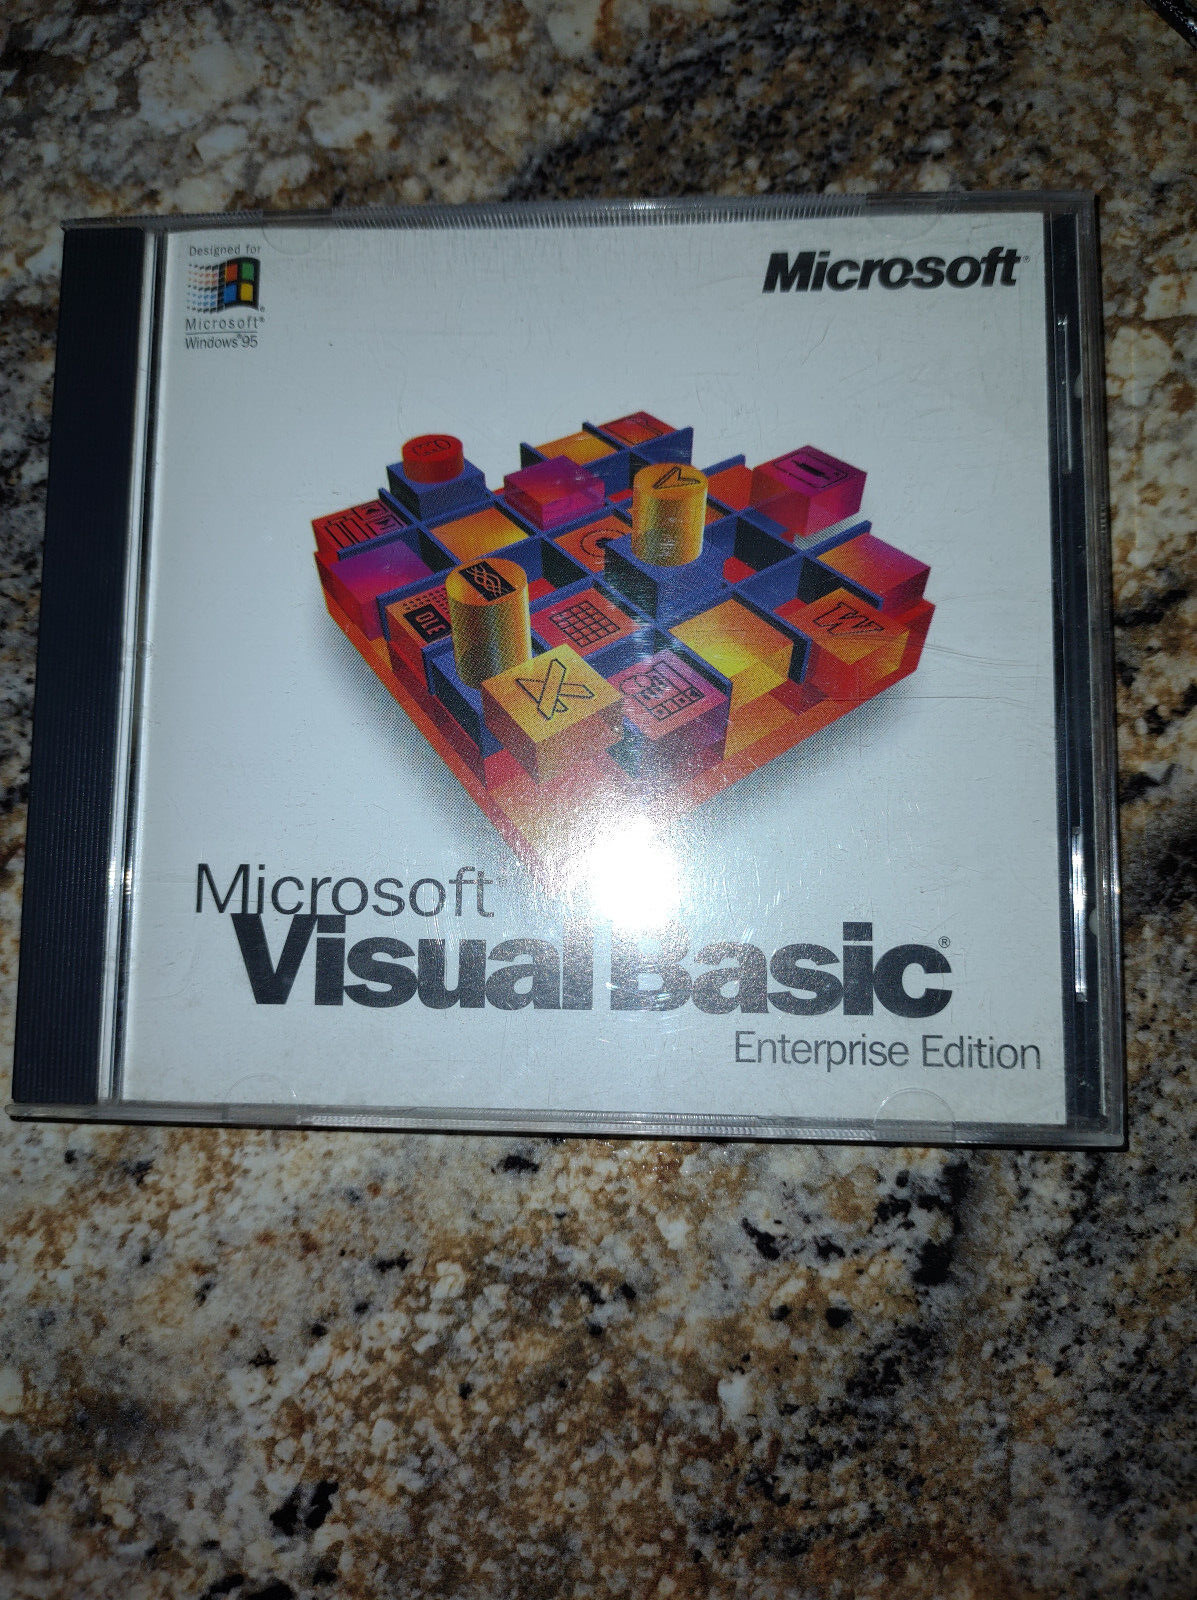 Microsoft Visual Basic Enterprise Edition 4.0 With Key Windows 95 Used.